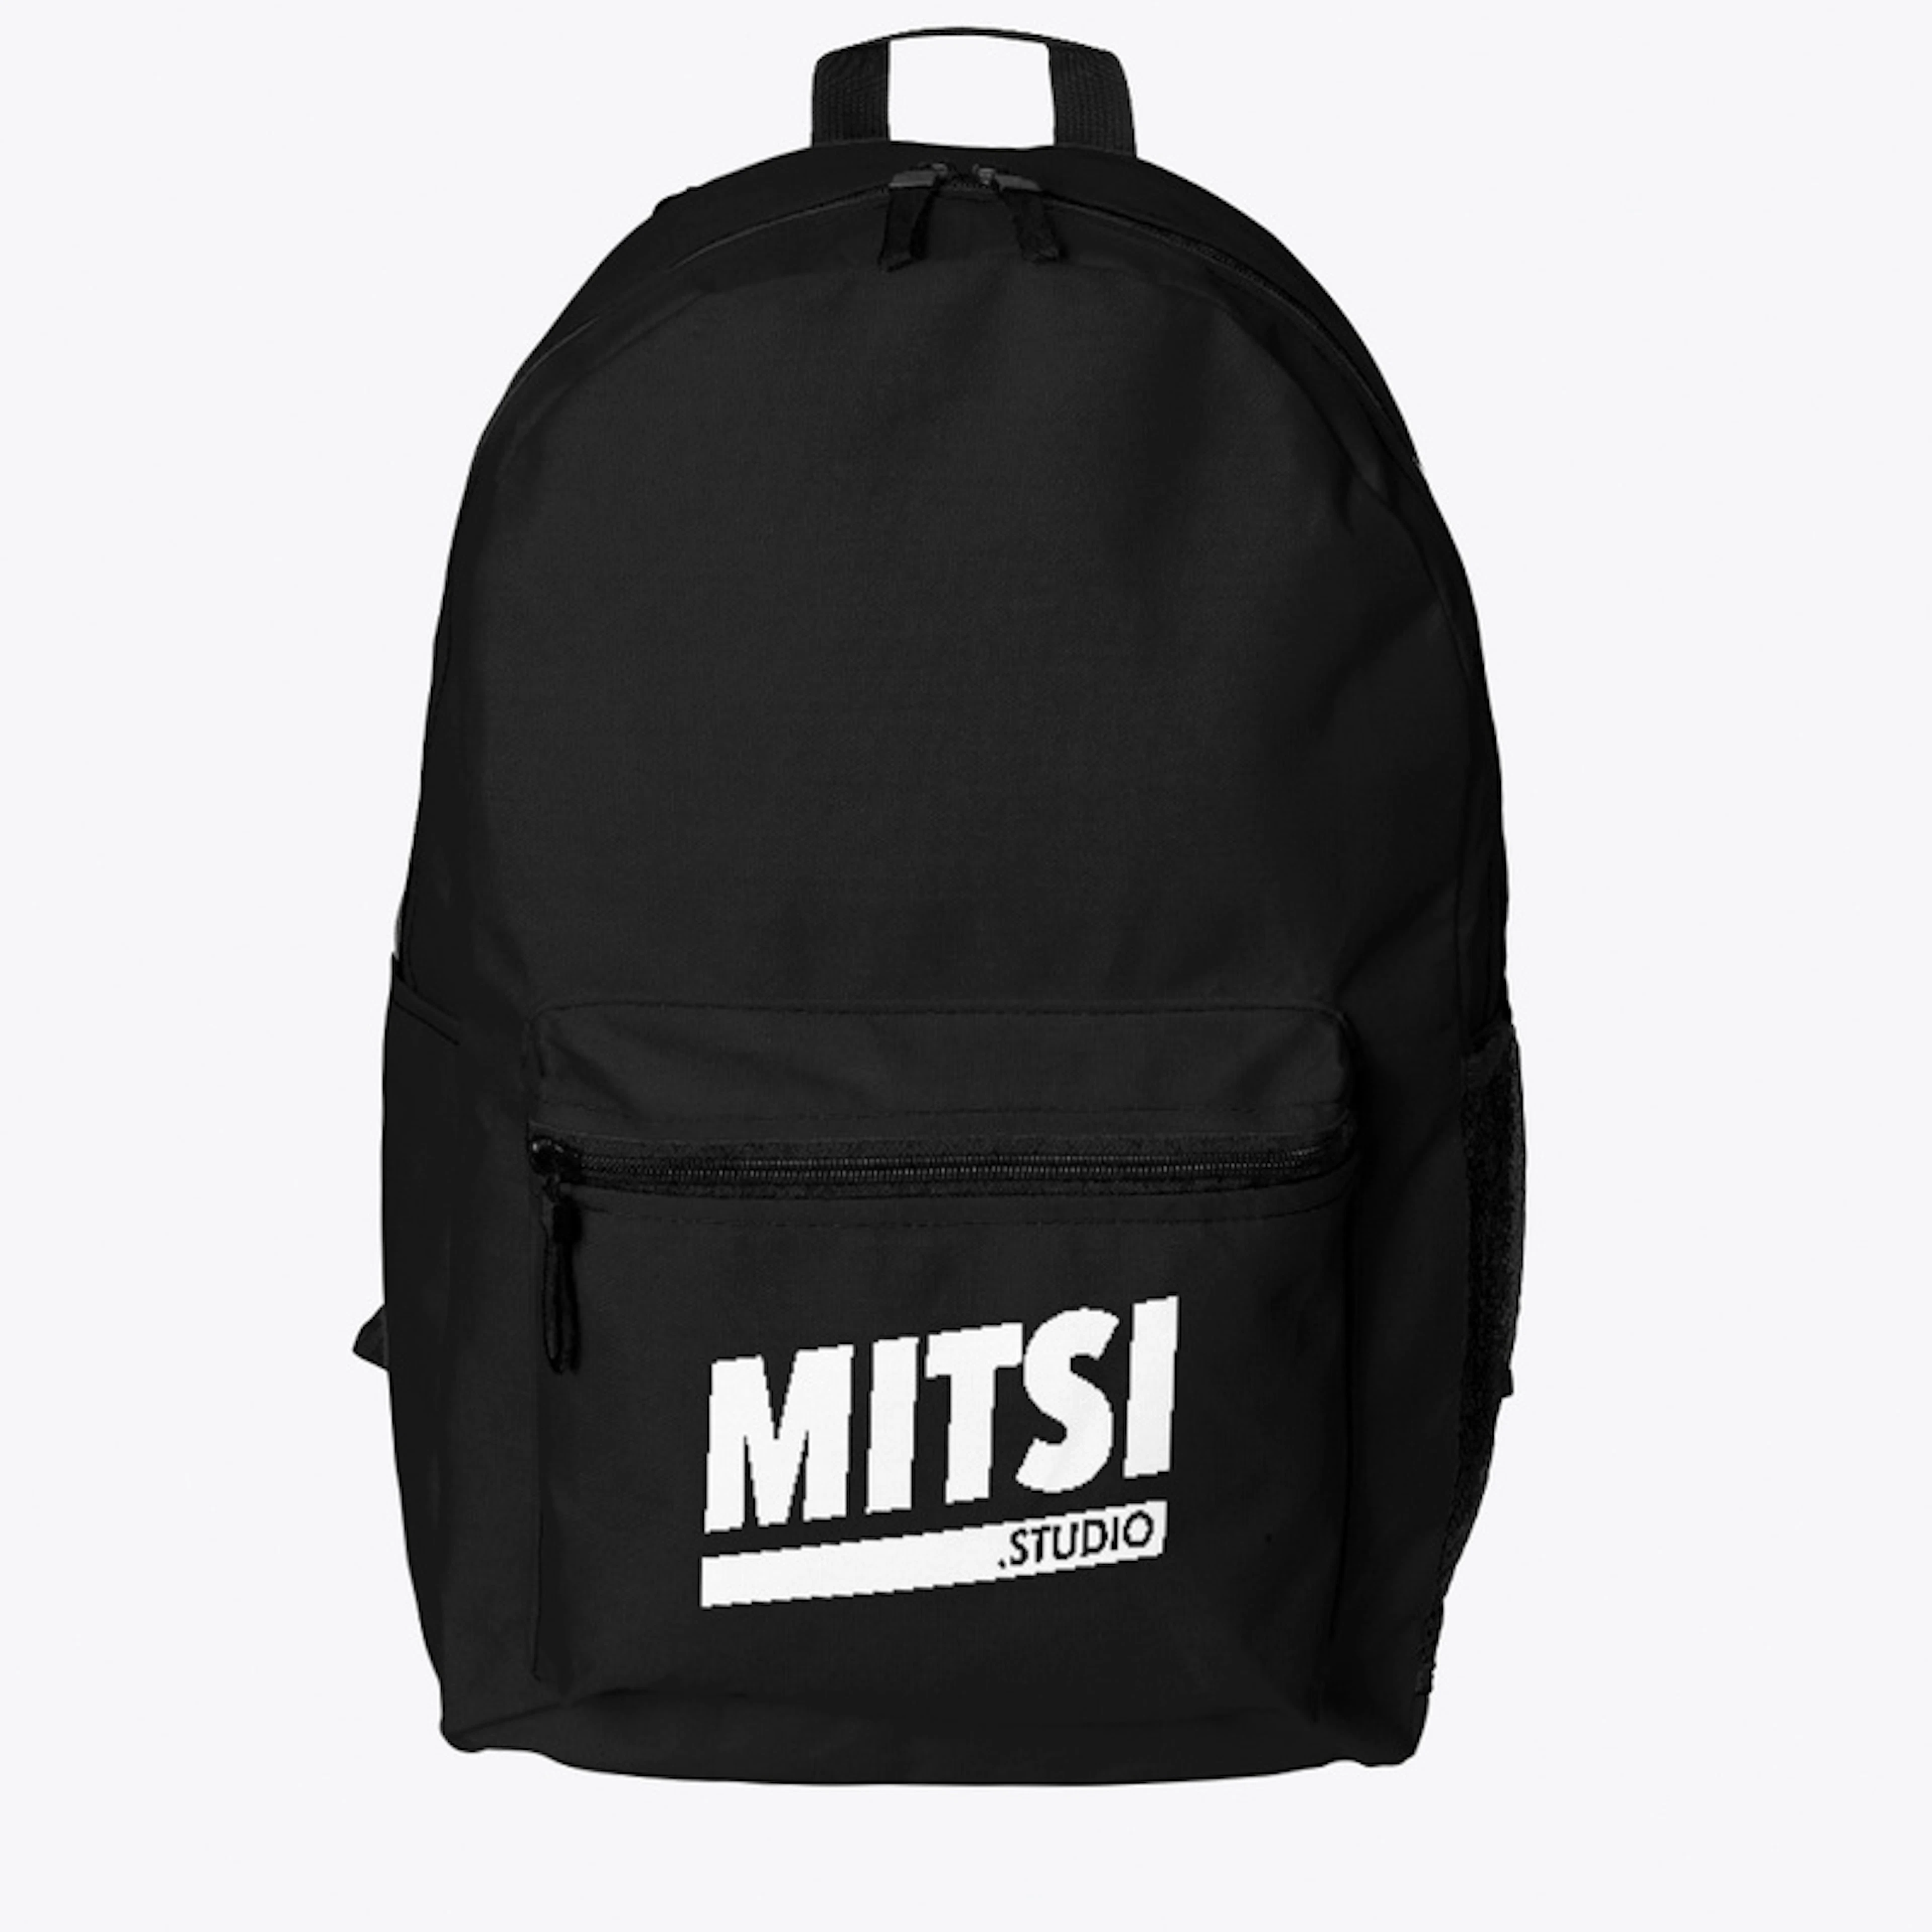 Mitsi Studio Collection